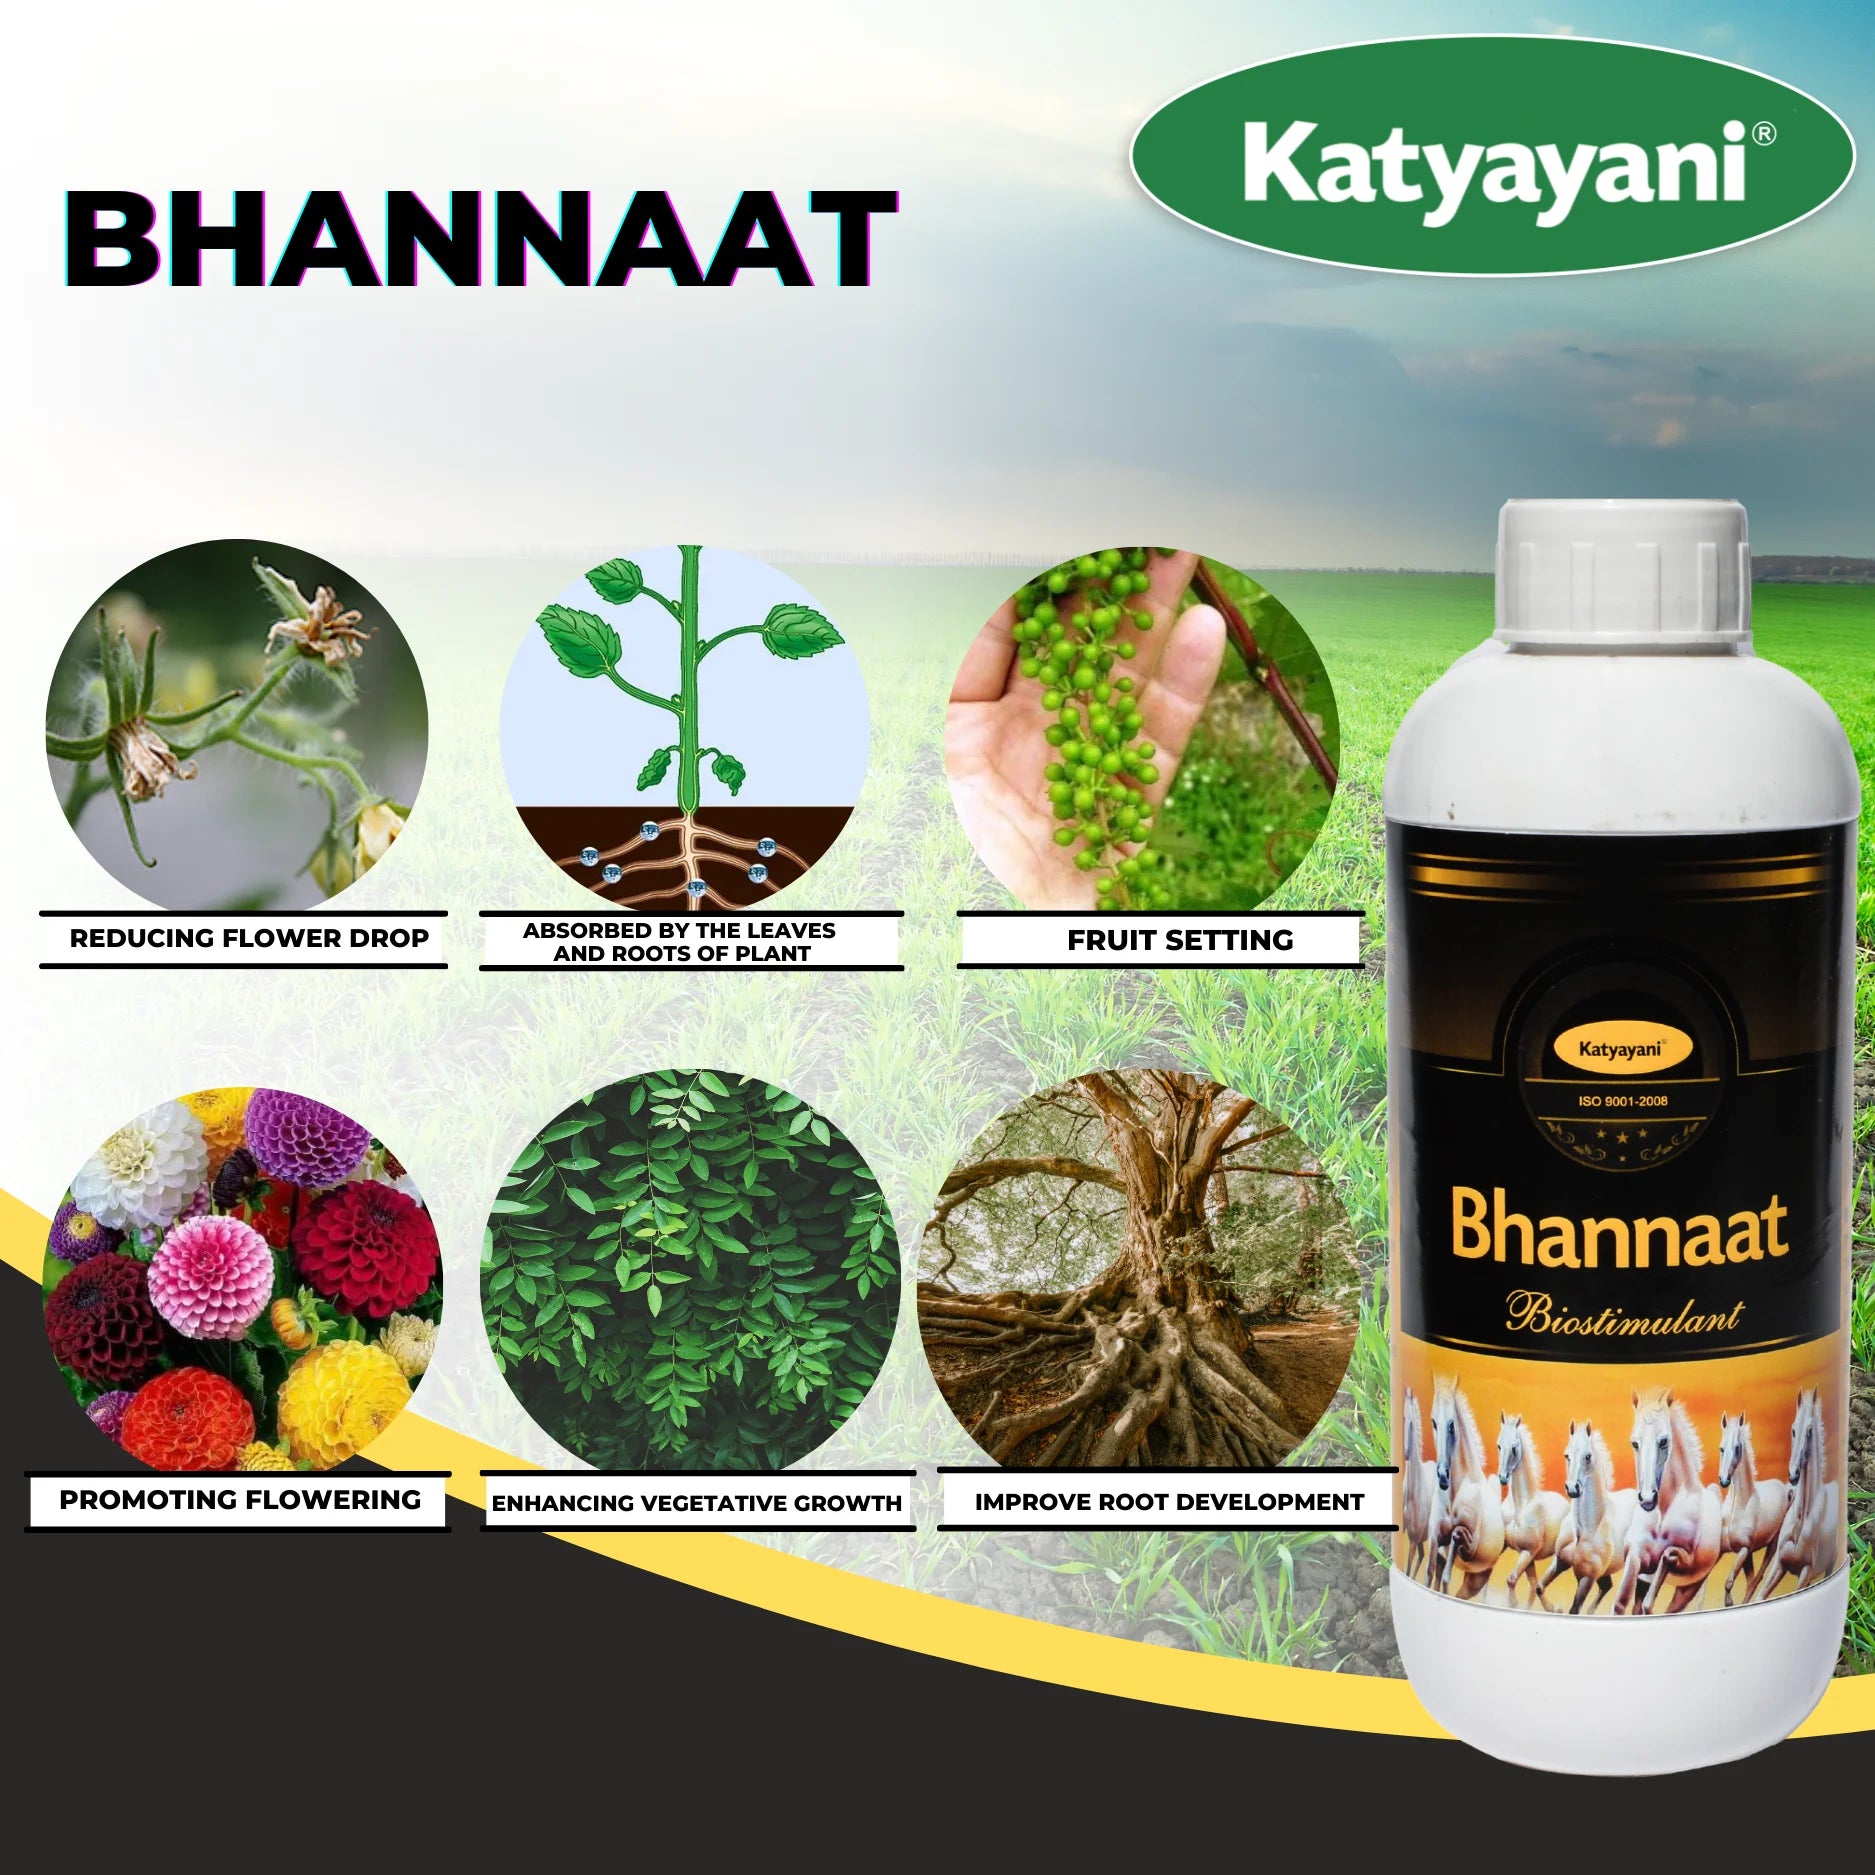 Katyayani Bhannaat Bio Stimulant Plant Growth regulator for fruit setting & improve root development & more